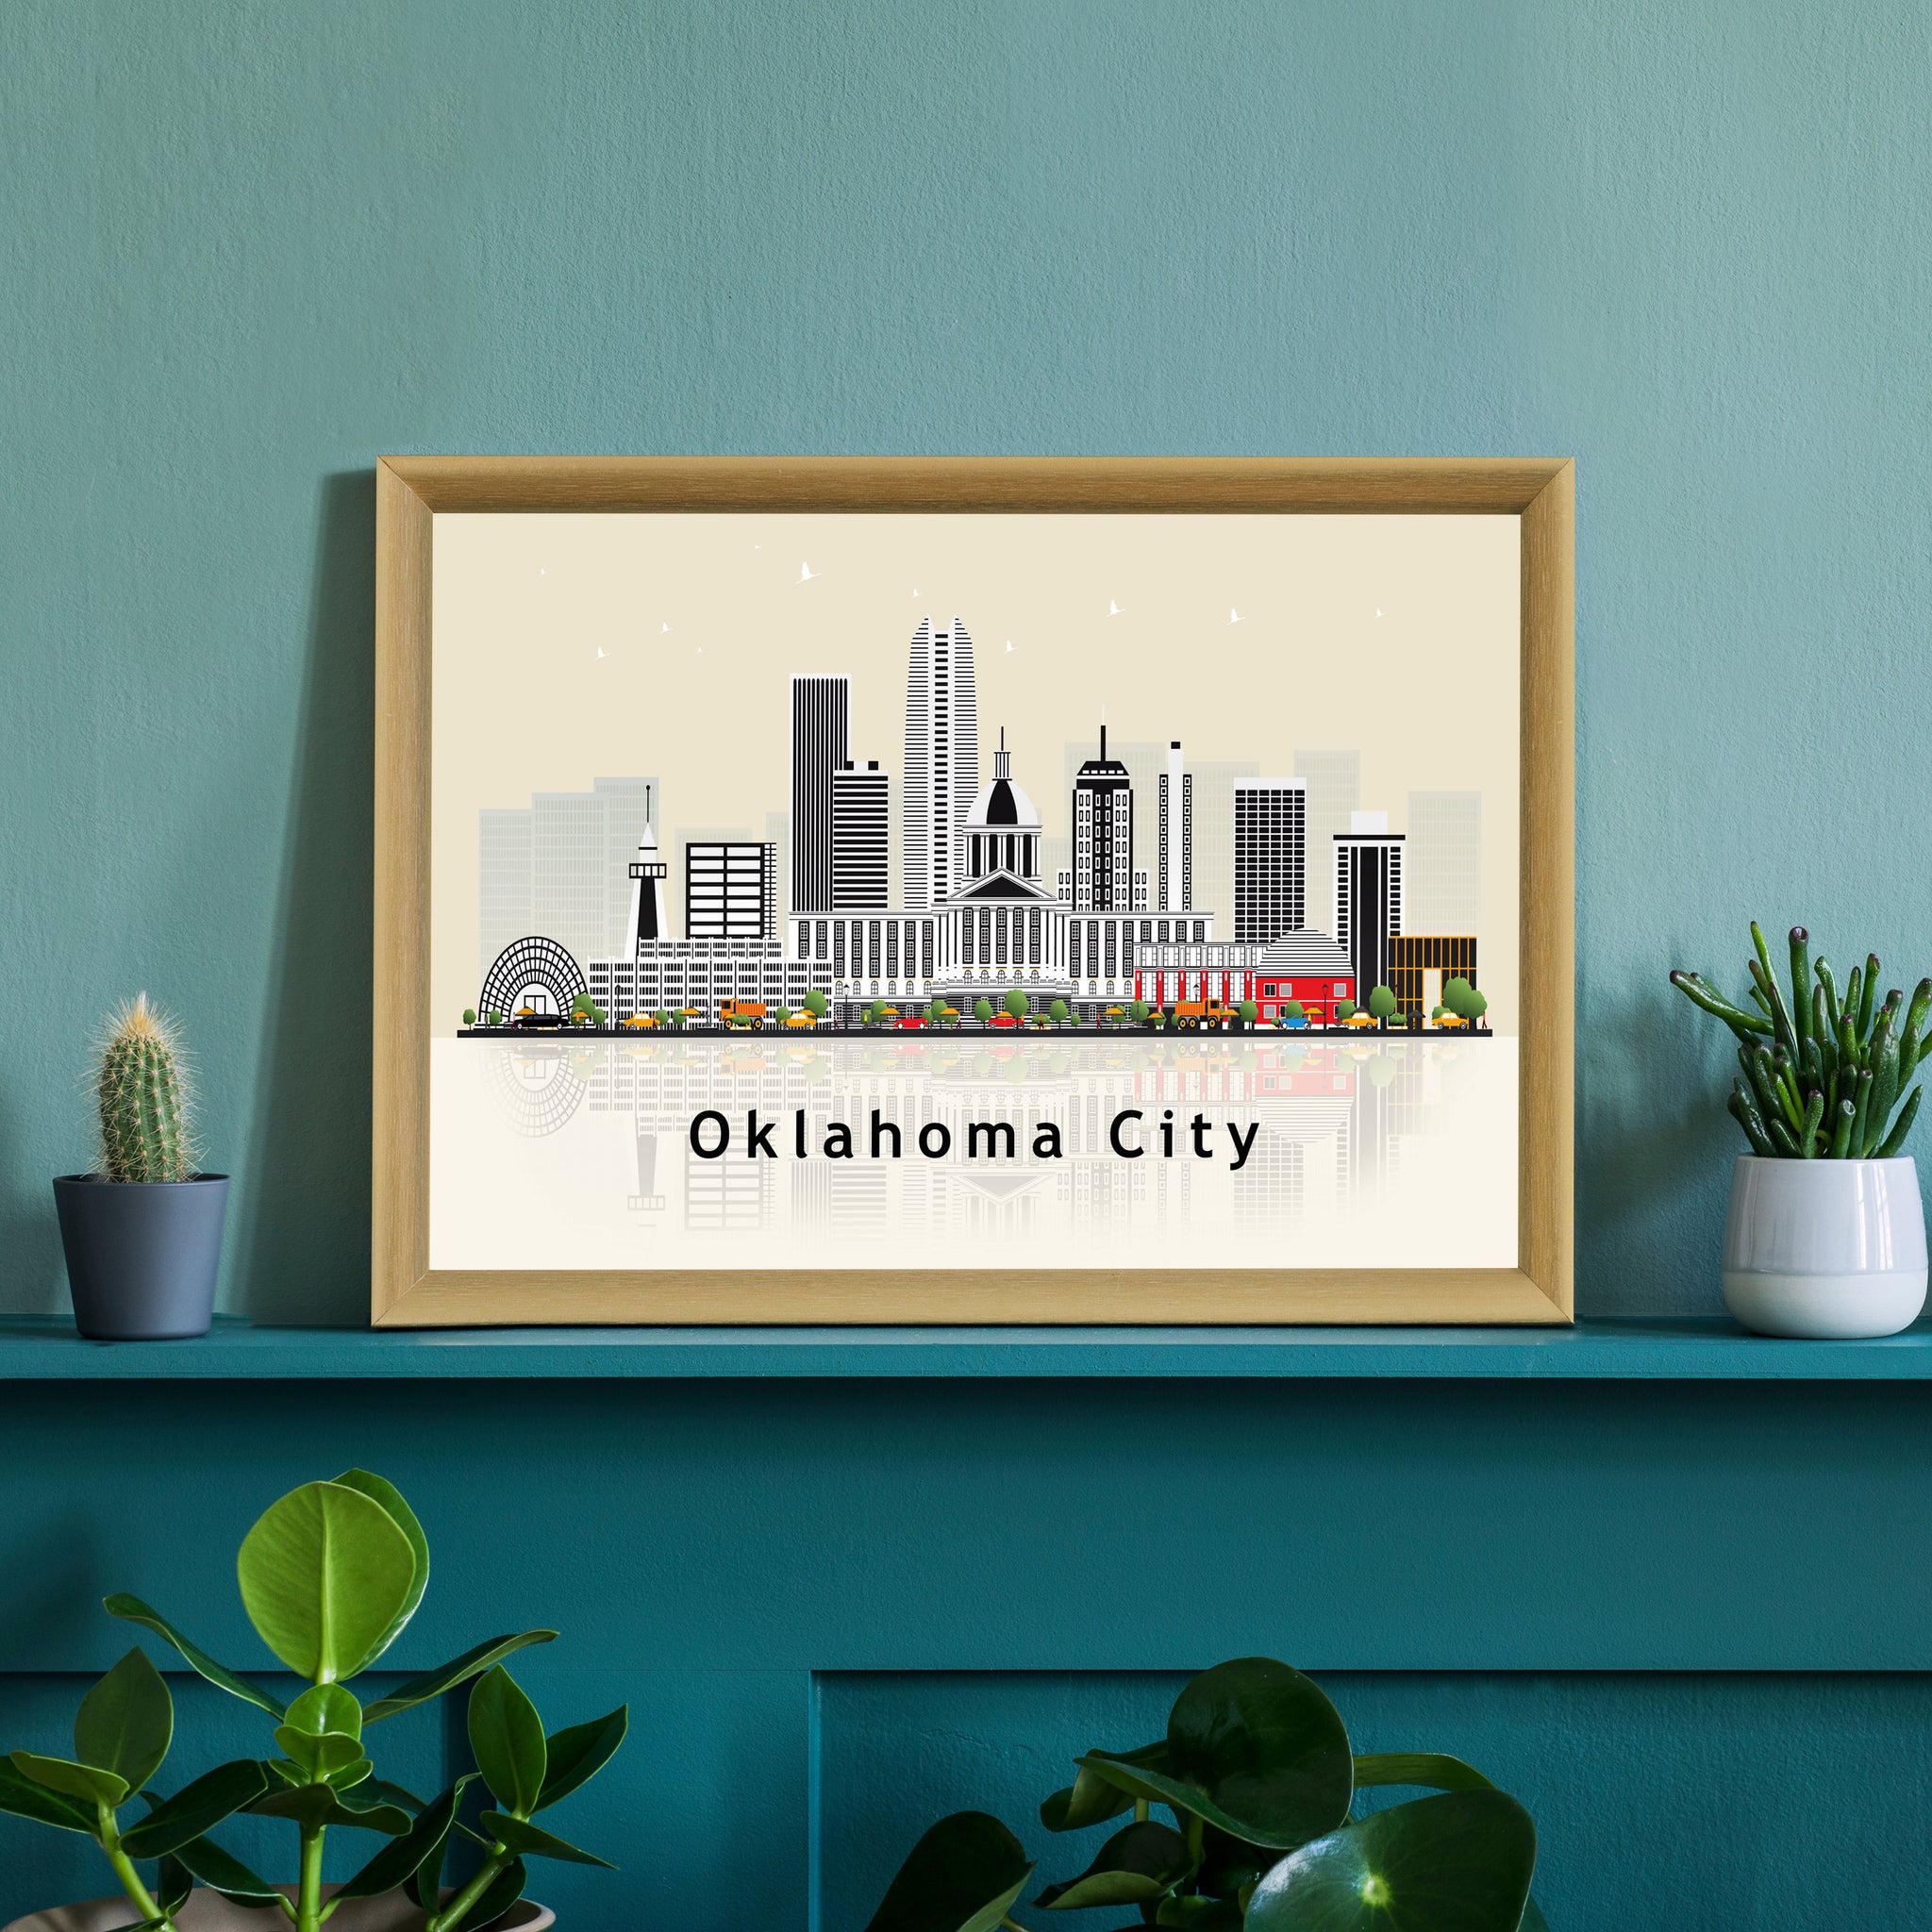 OKLAHOMA CITY OKLAHOMA Illustration skyline poster, Oklahoma modern skyline cityscape poster print, Landmark poster, Home wall decorations